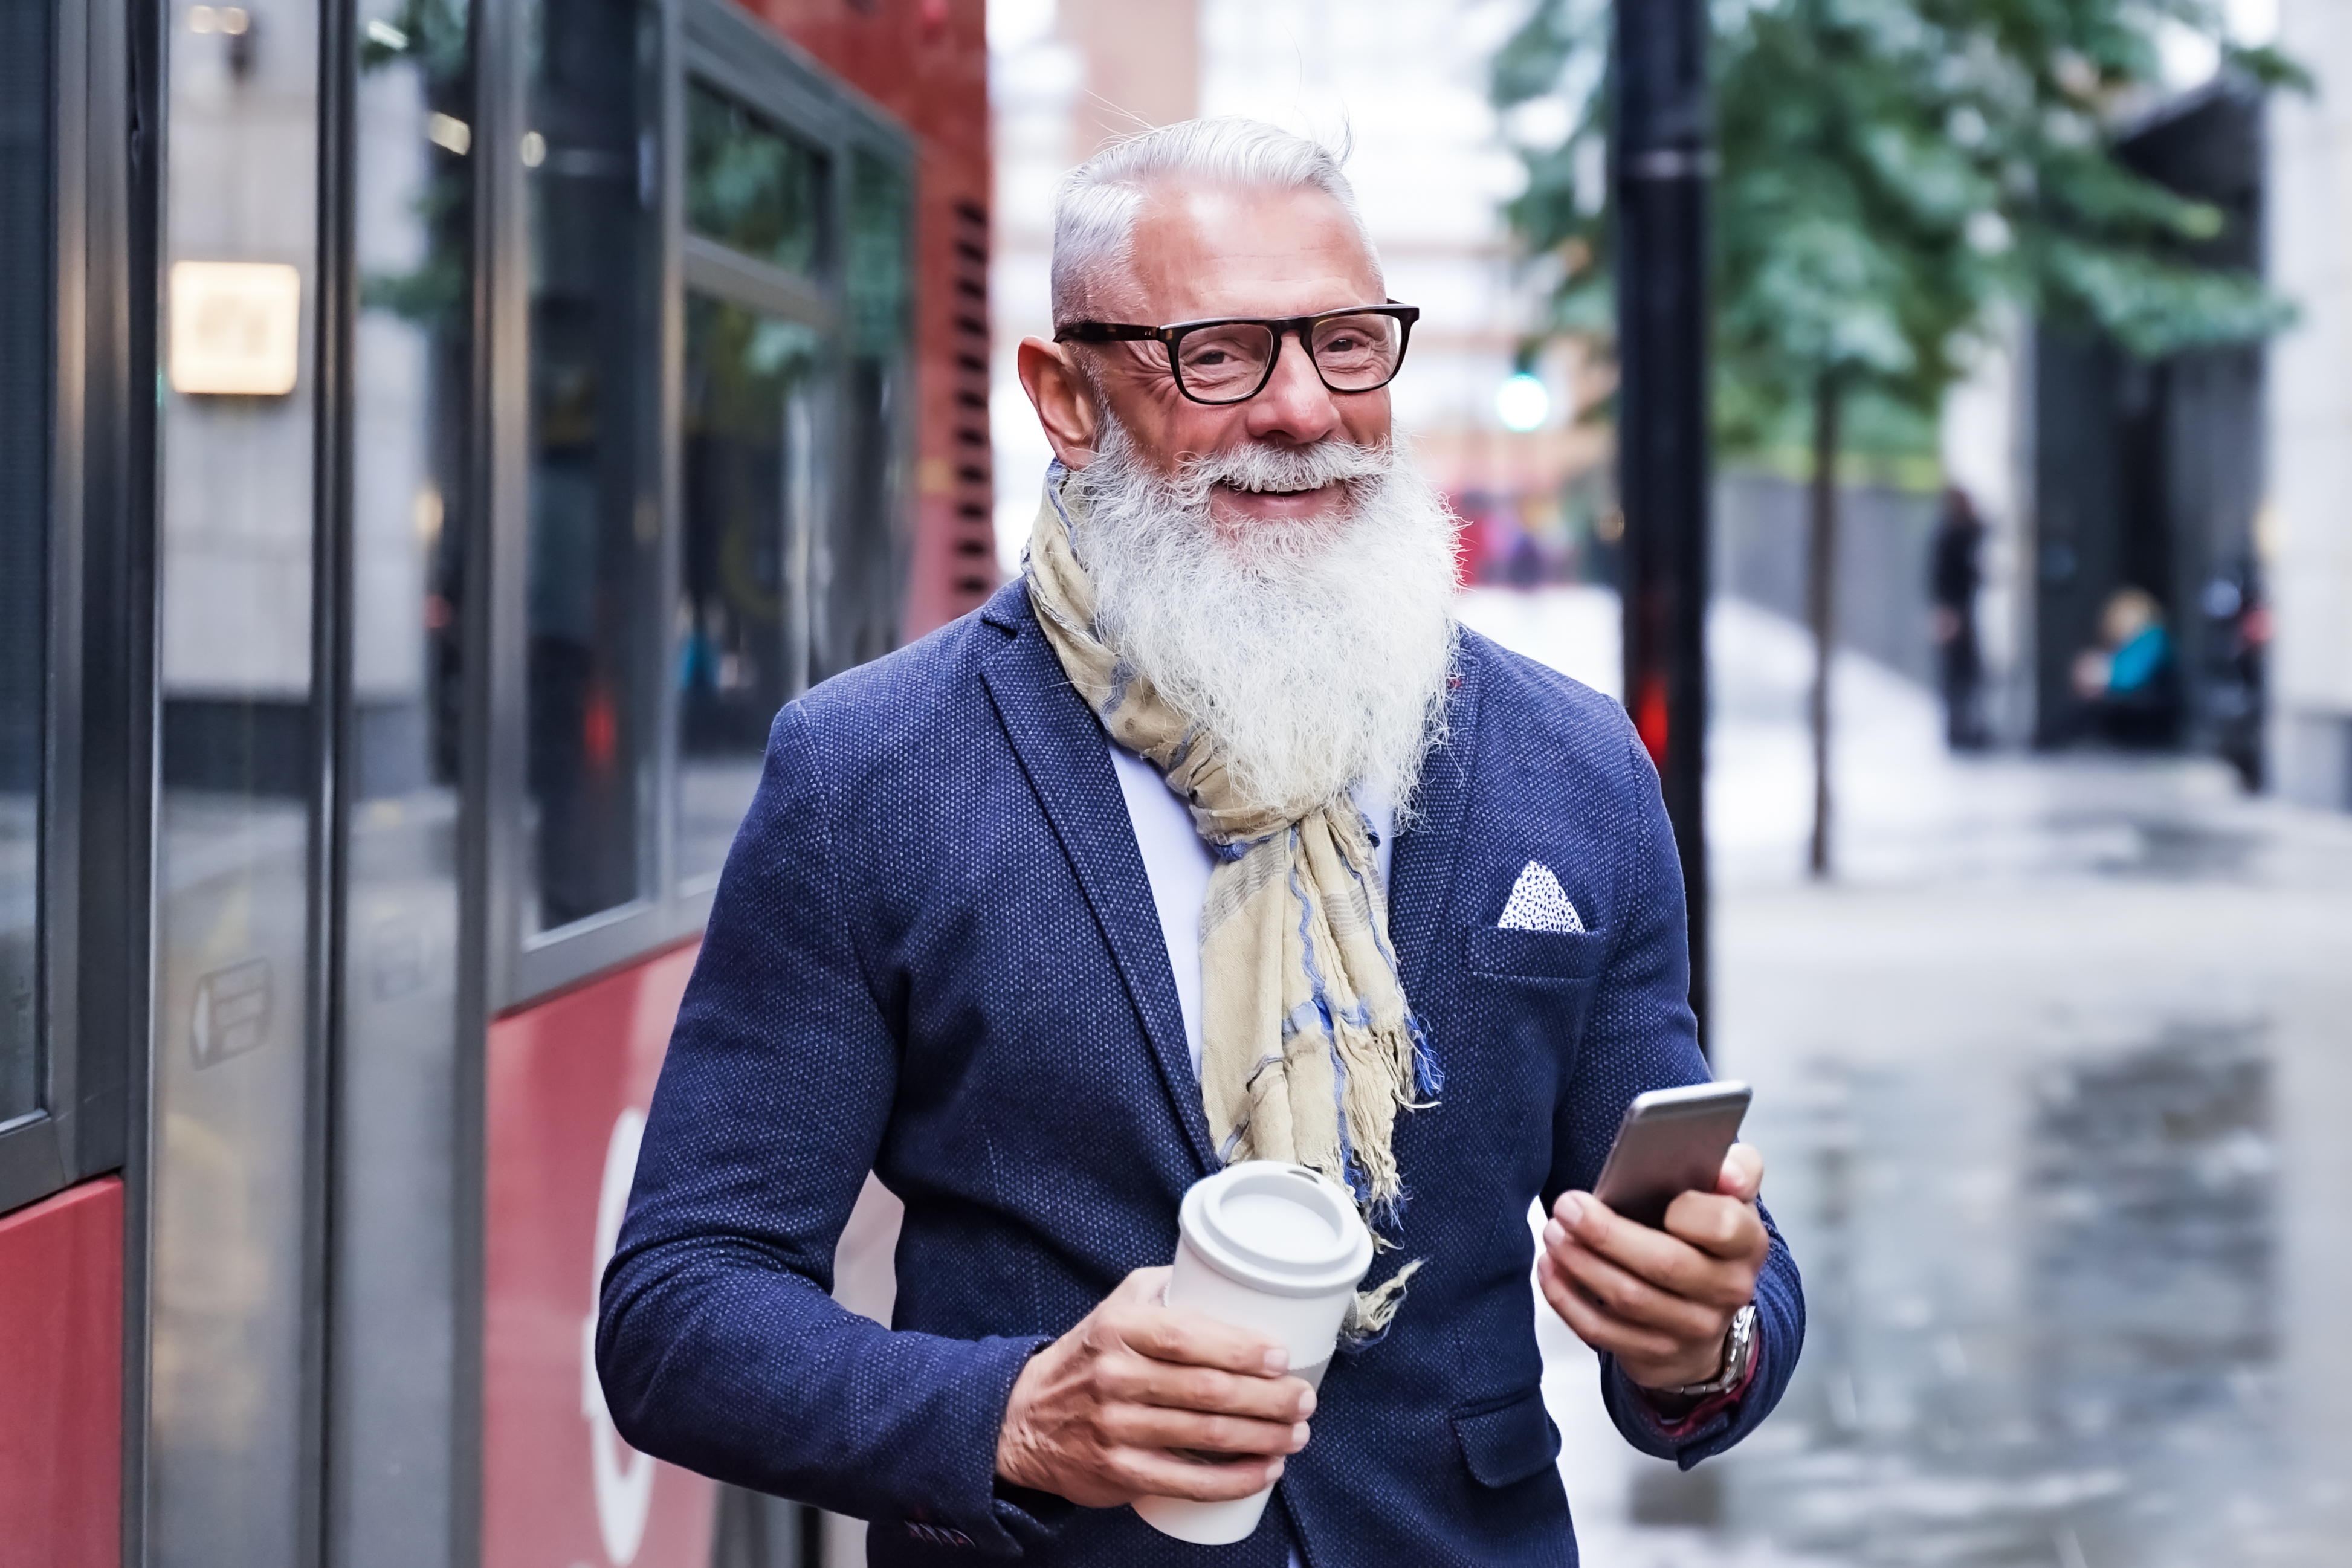 An older man walking on a street | Source: Shutterstock